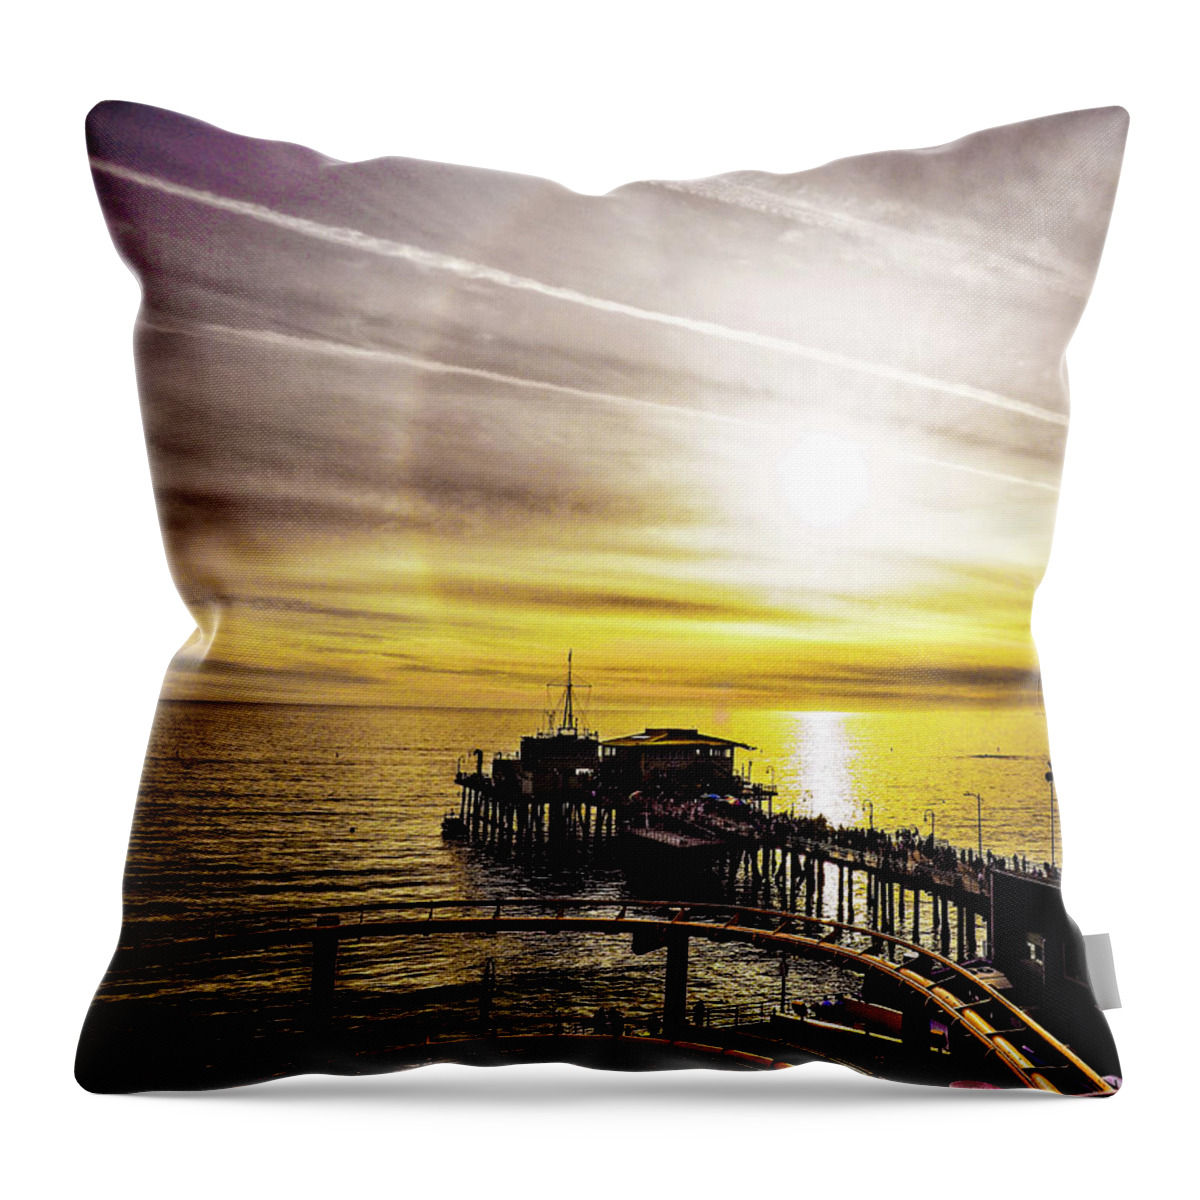 Rebecca Dru Throw Pillow featuring the photograph Sunset at Santa Monica Beach view from Ferris Wheel by Rebecca Dru